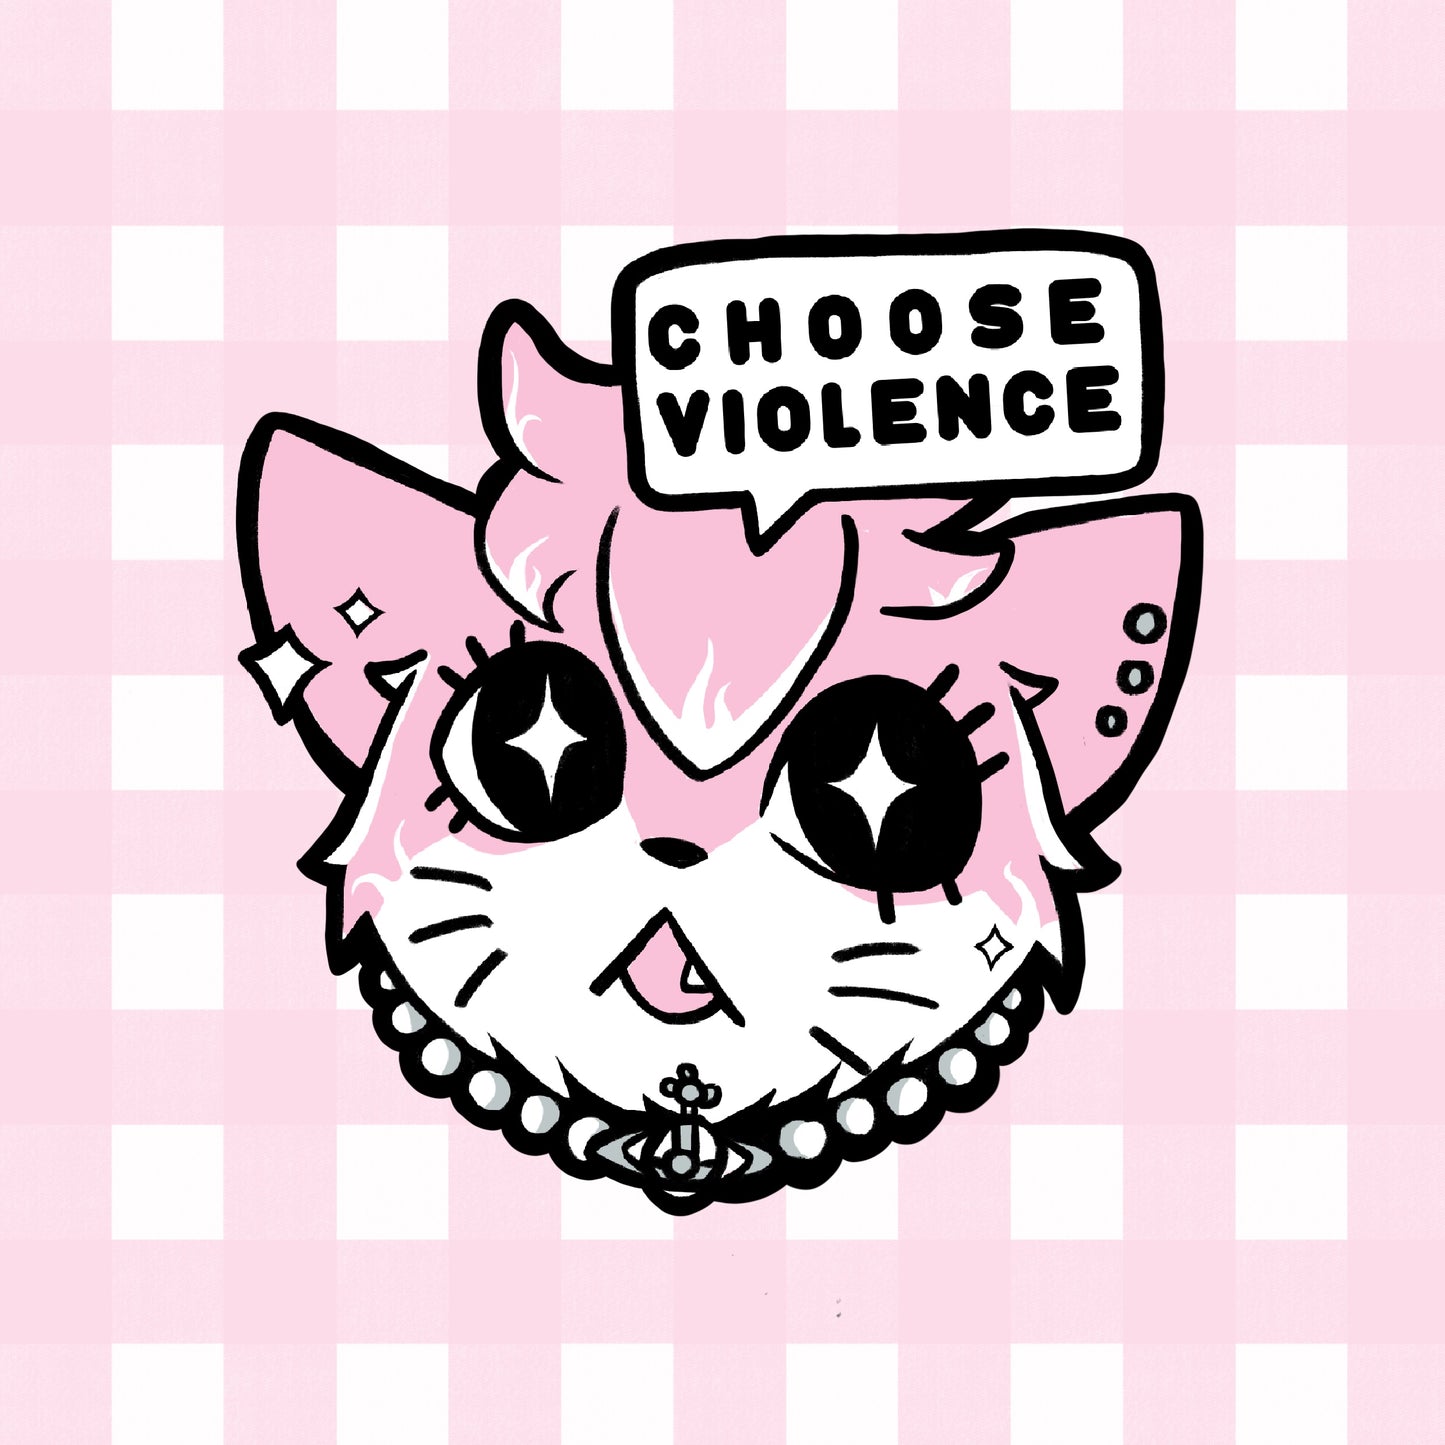 Print - Lerchas "Choose Violence"